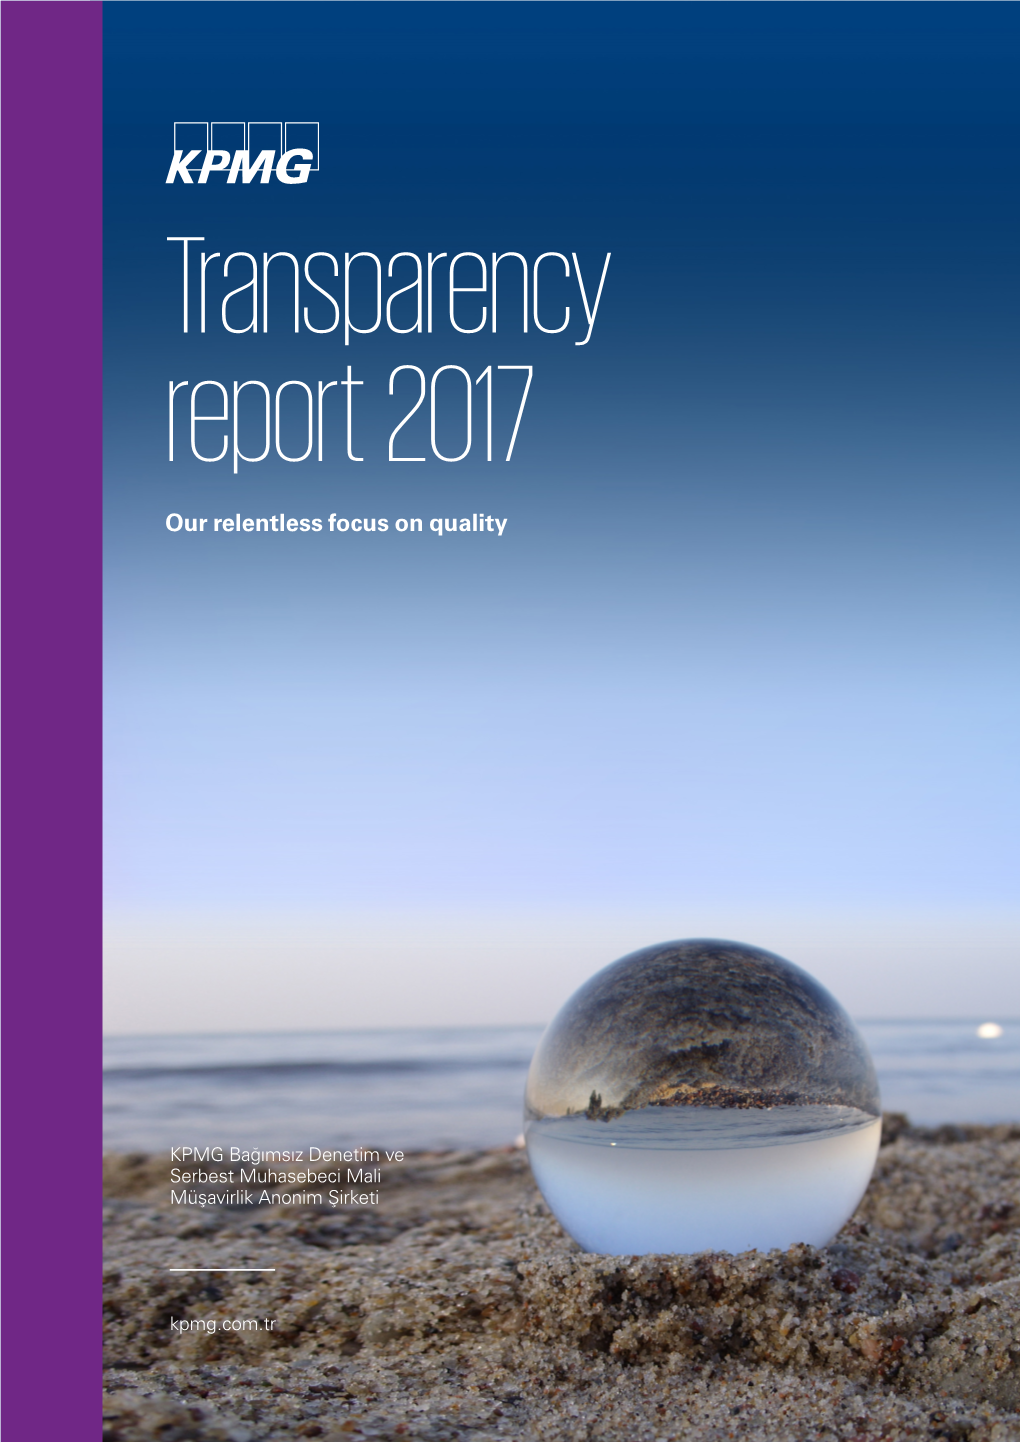 KPMG Turkey Transparency Report 2017